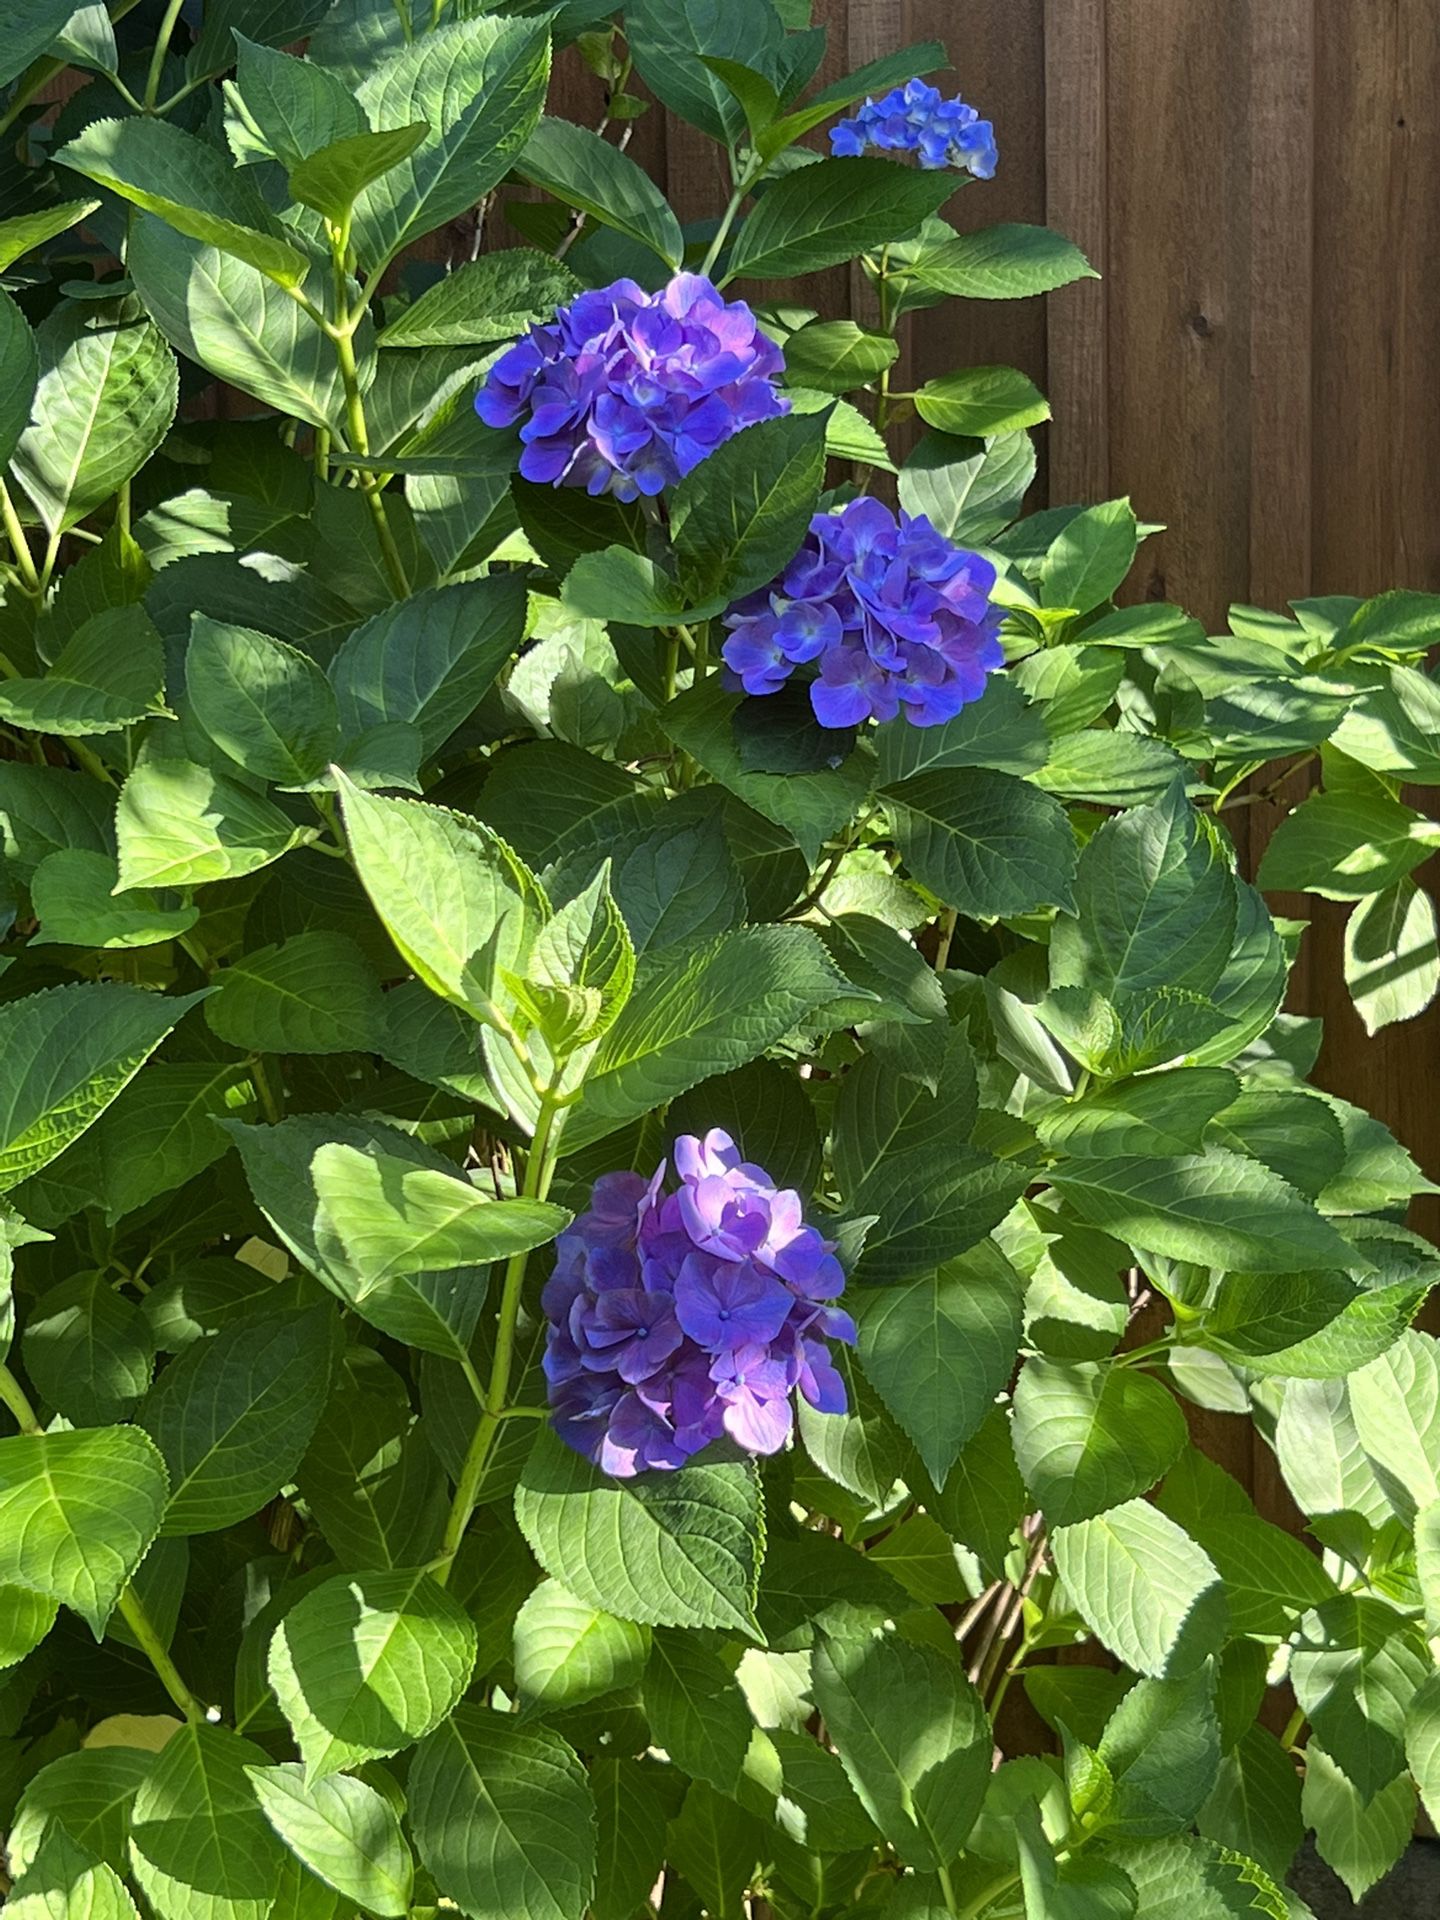 Hydrangea Potted Plants Purple Blooms (3 Pots)